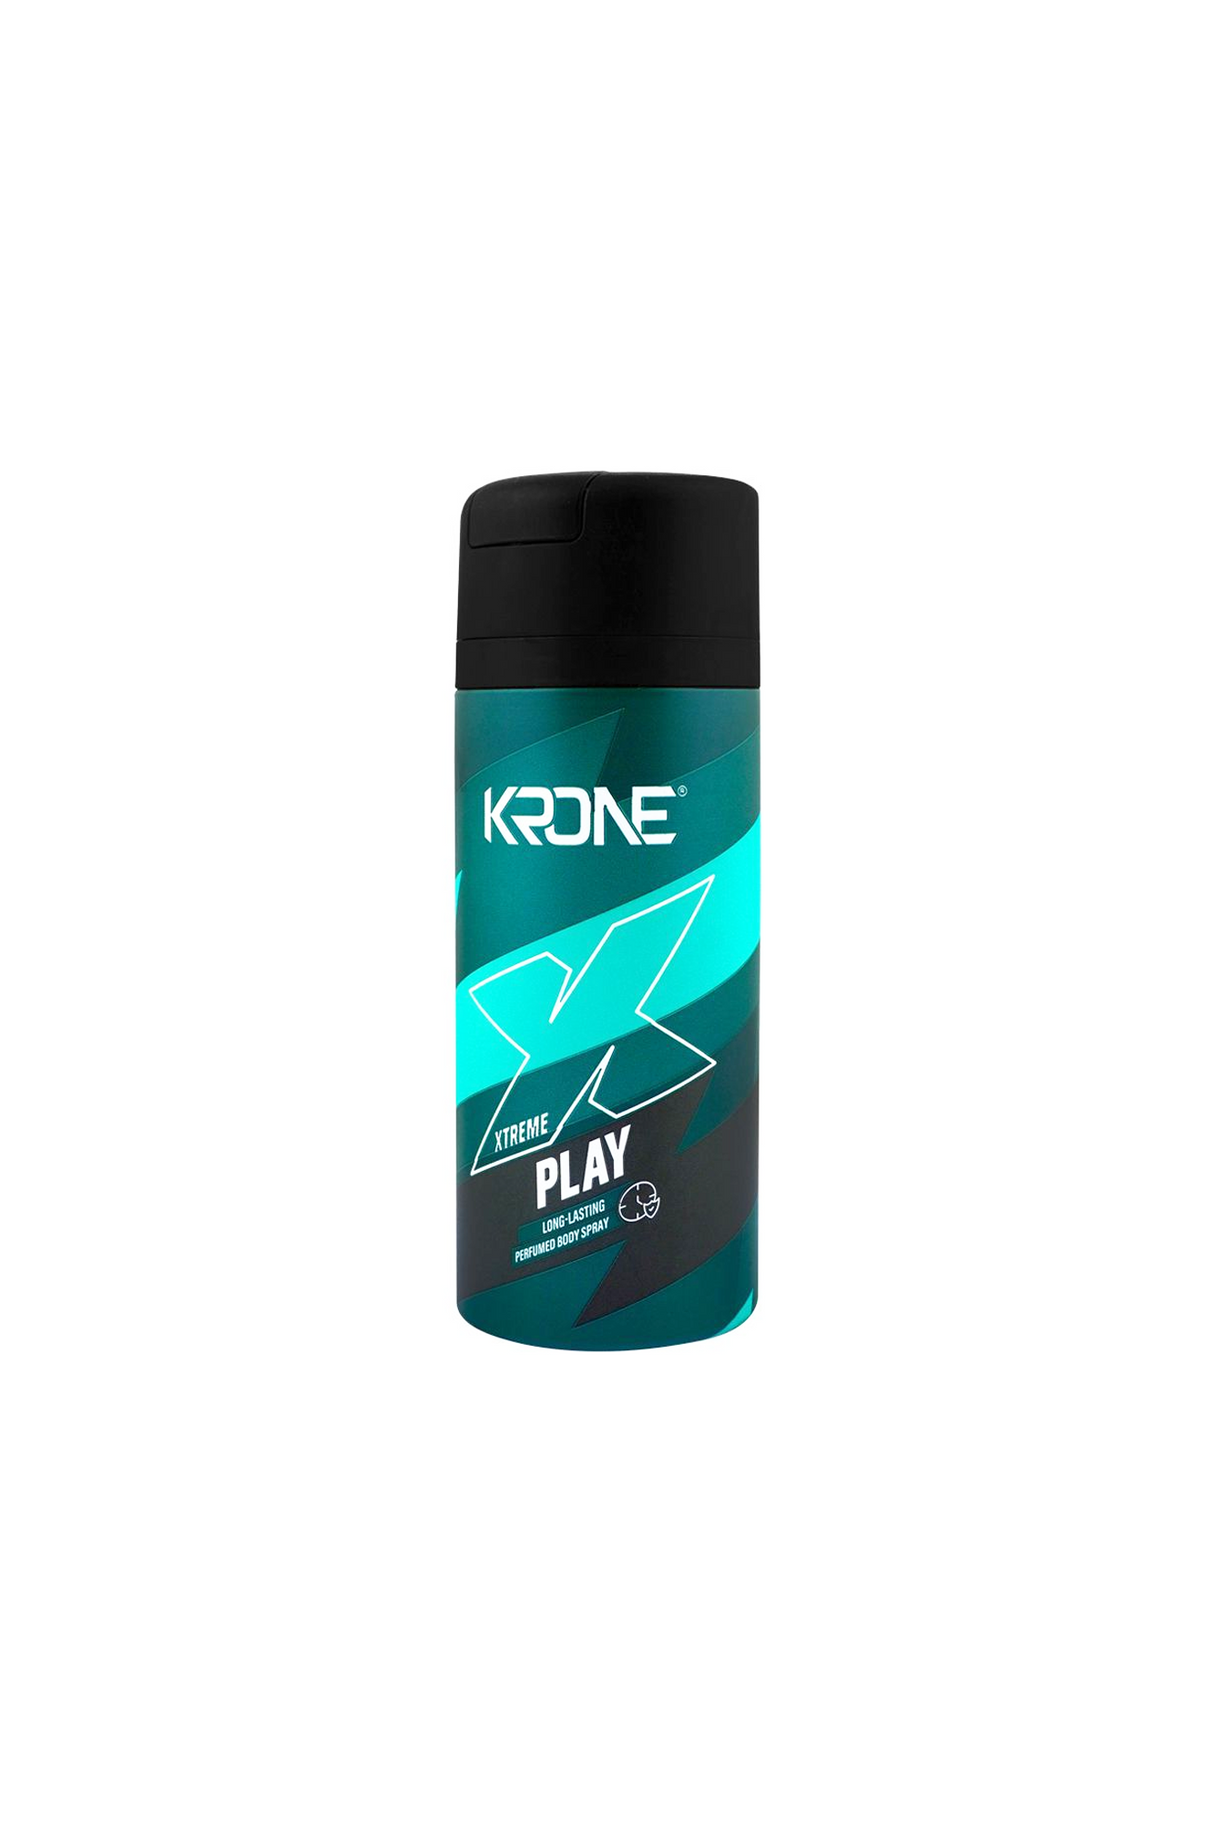 krone play deodorant body spray 150ml